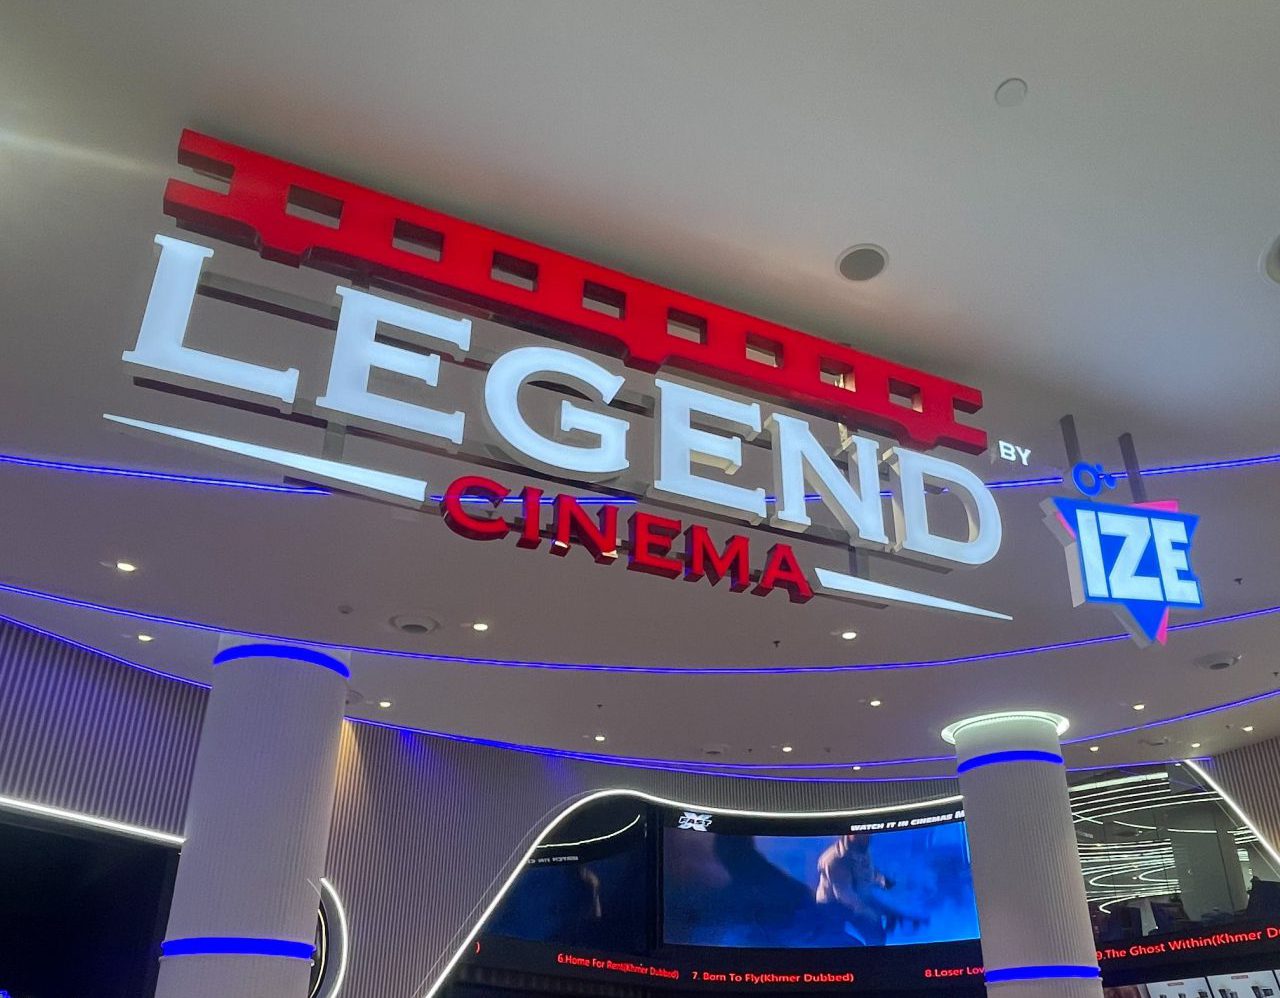 Legend Cinema